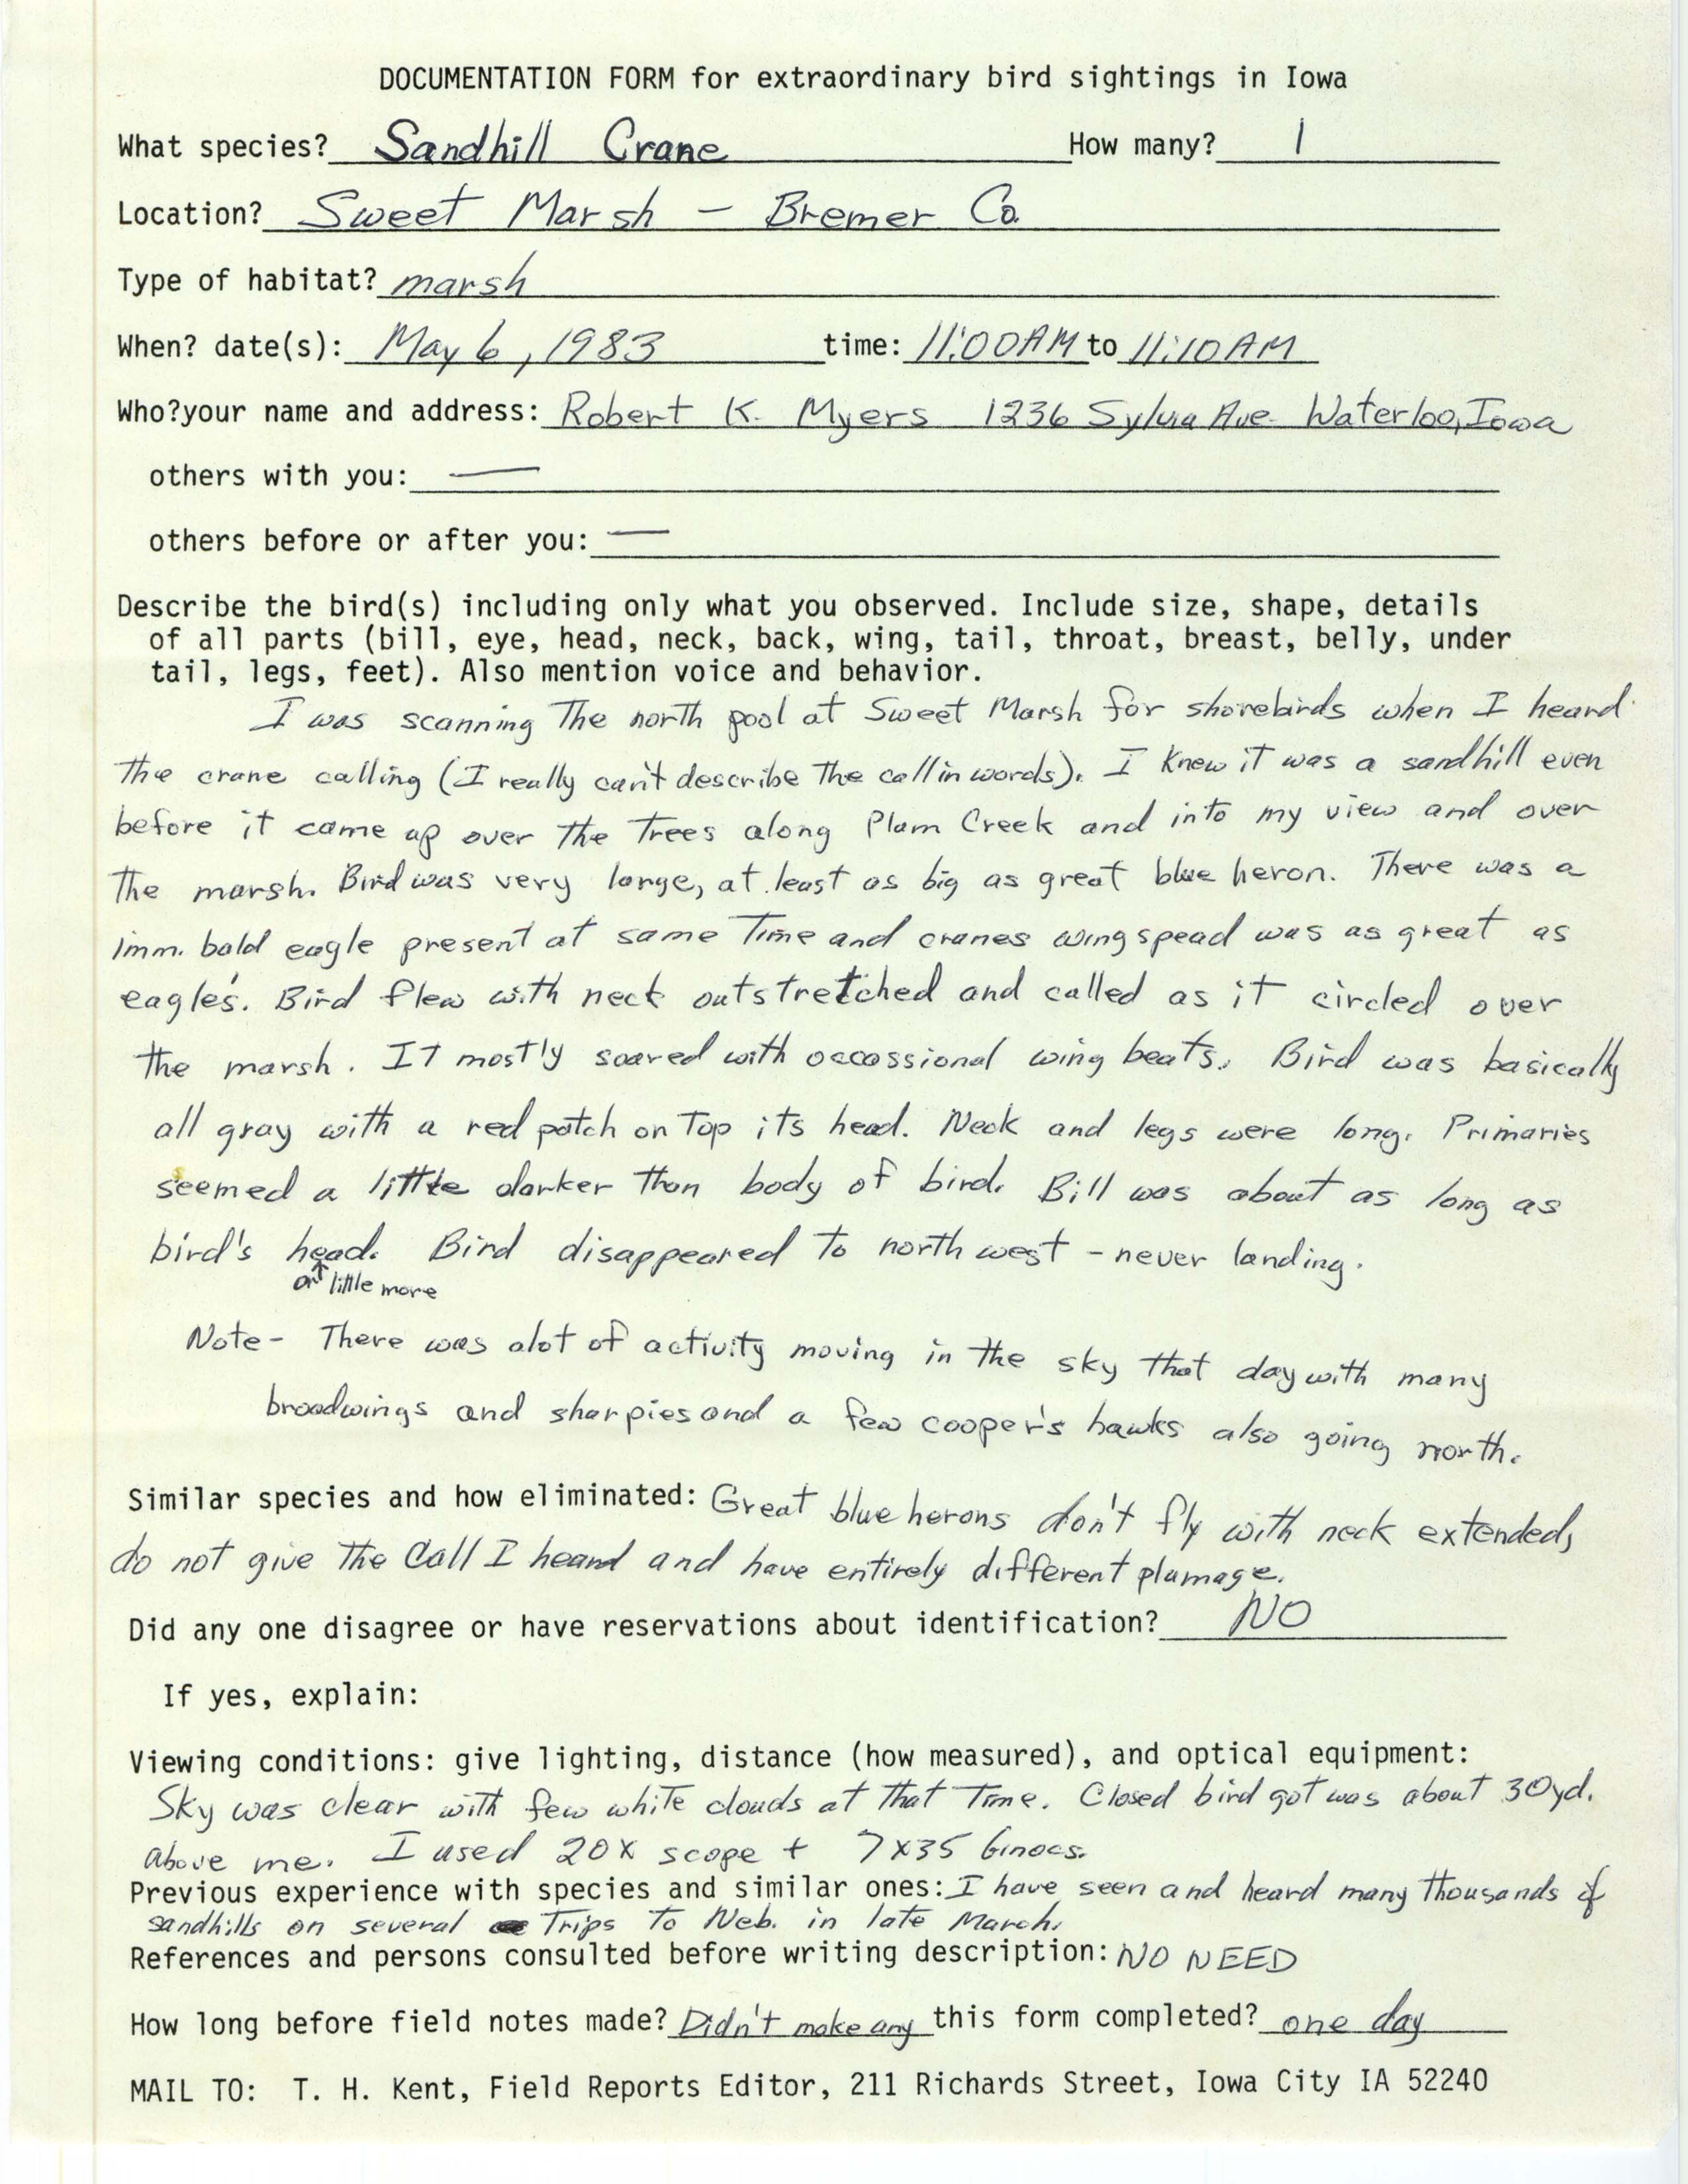 Rare bird documentation form for Sandhill Crane at Sweet Marsh, 1983